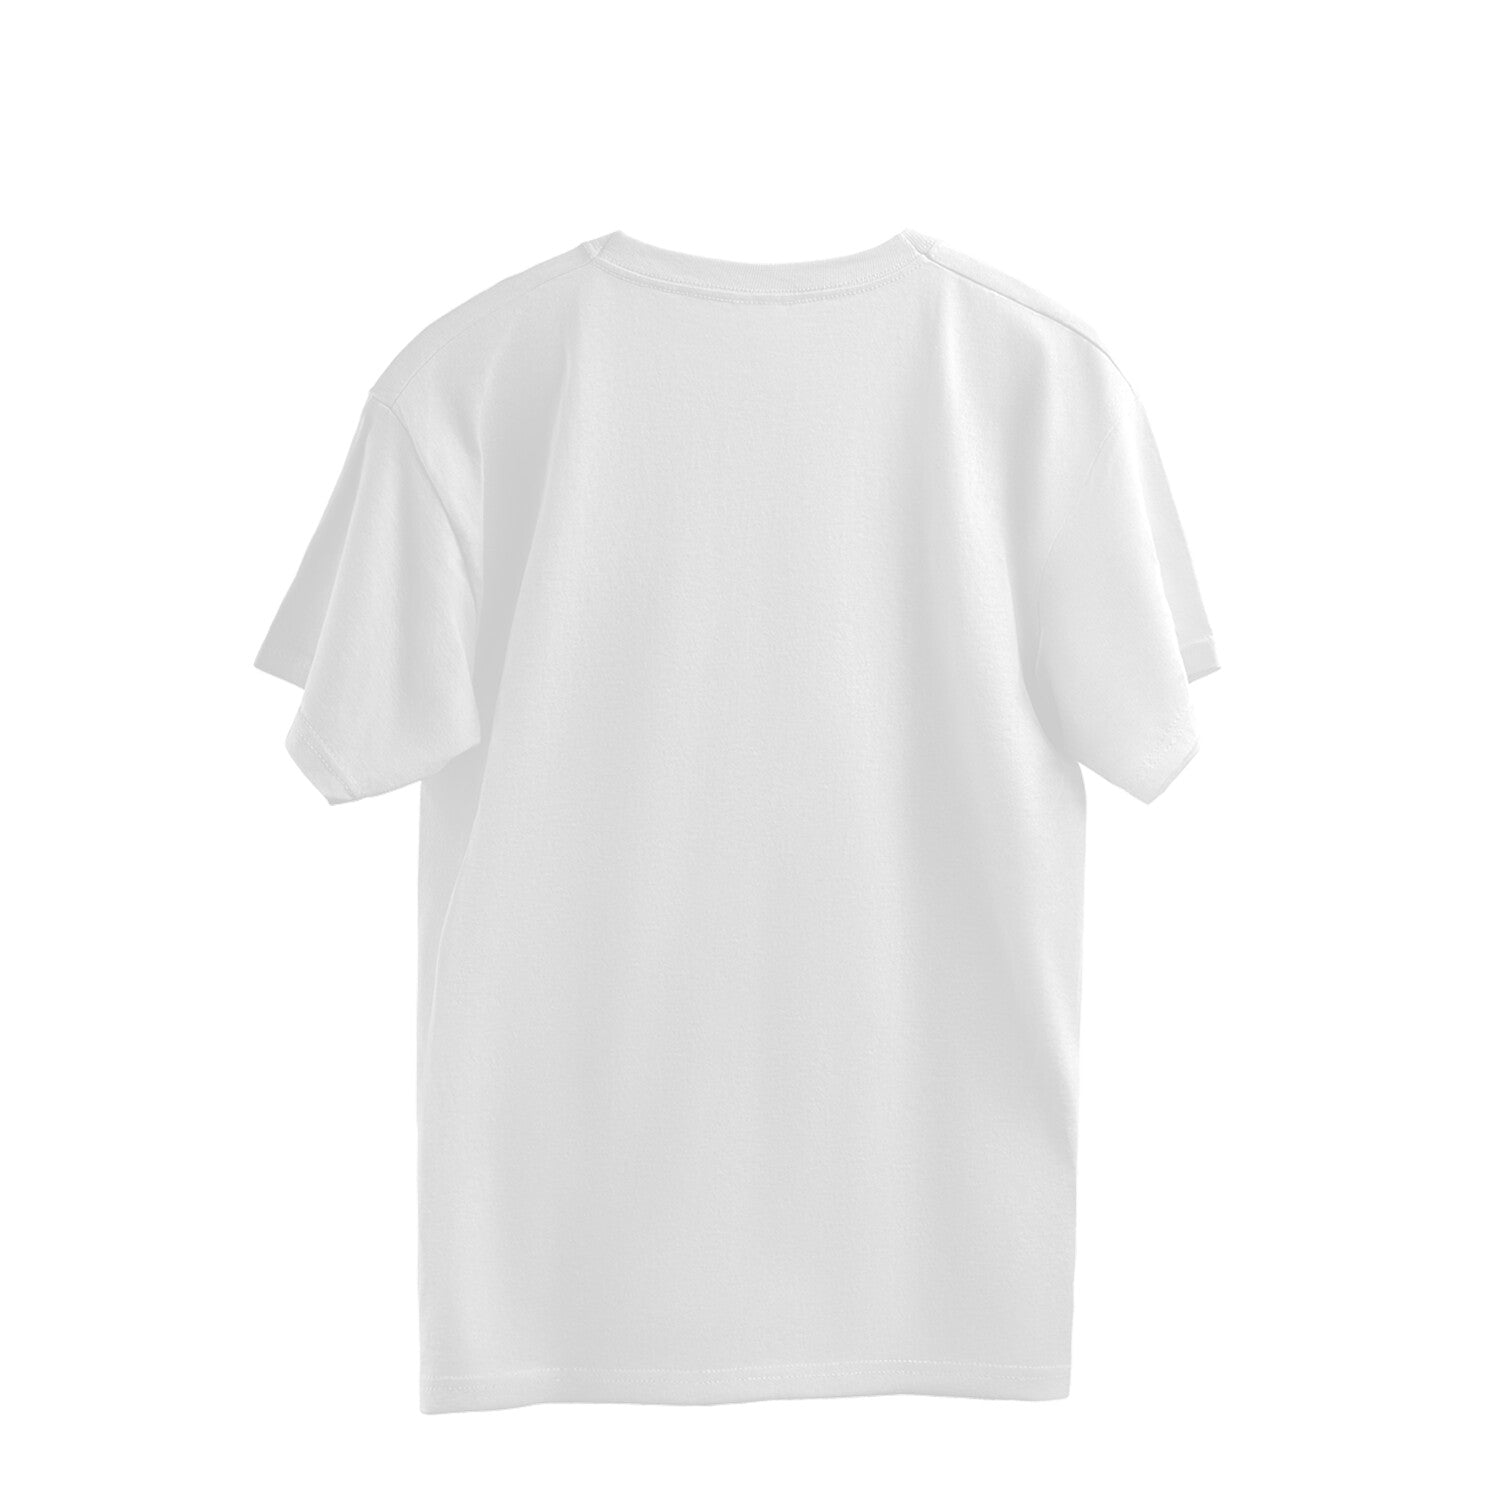 Men's Cotton Oversized T-shirts Printrove